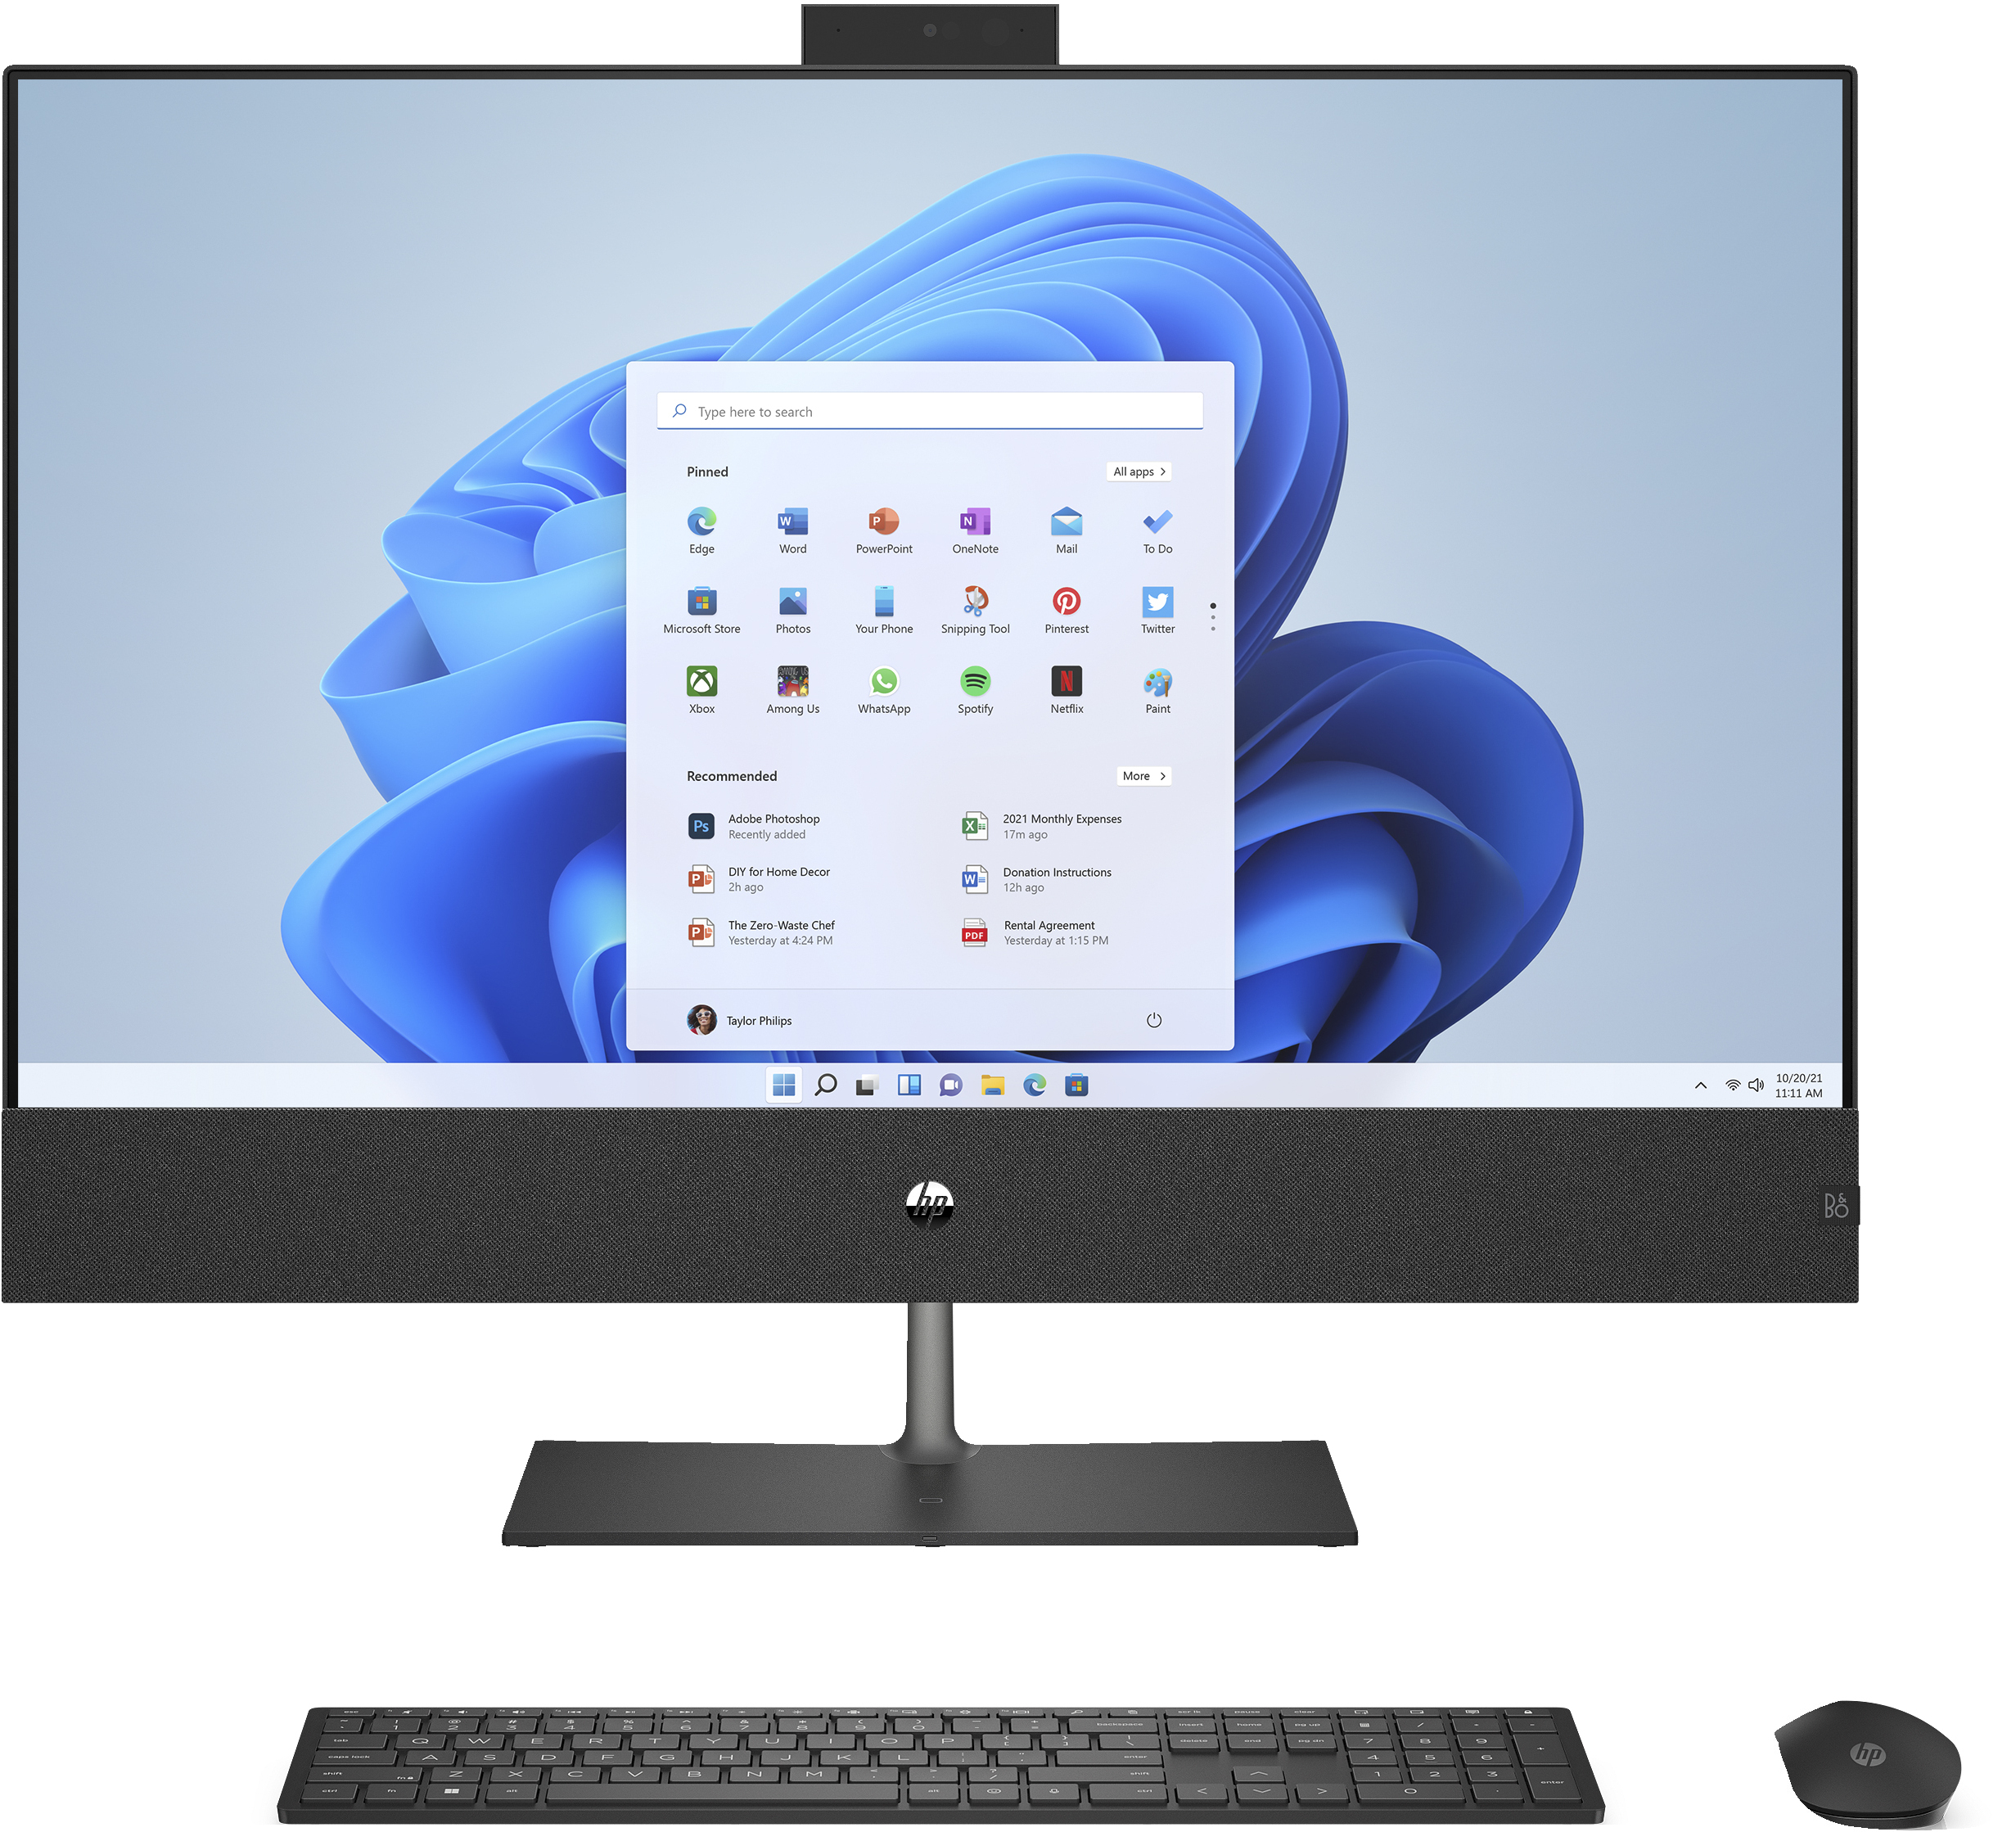 HP Pavilion 31.5 inch All-in-One Desktop PC 32-b1619ndBundle PC